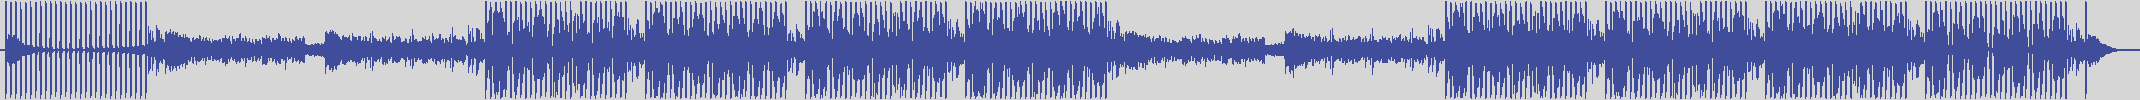 nf_boyz_records [NFY031] South Beach - Well Deep [Baja Sardinia Mix] audio wave form